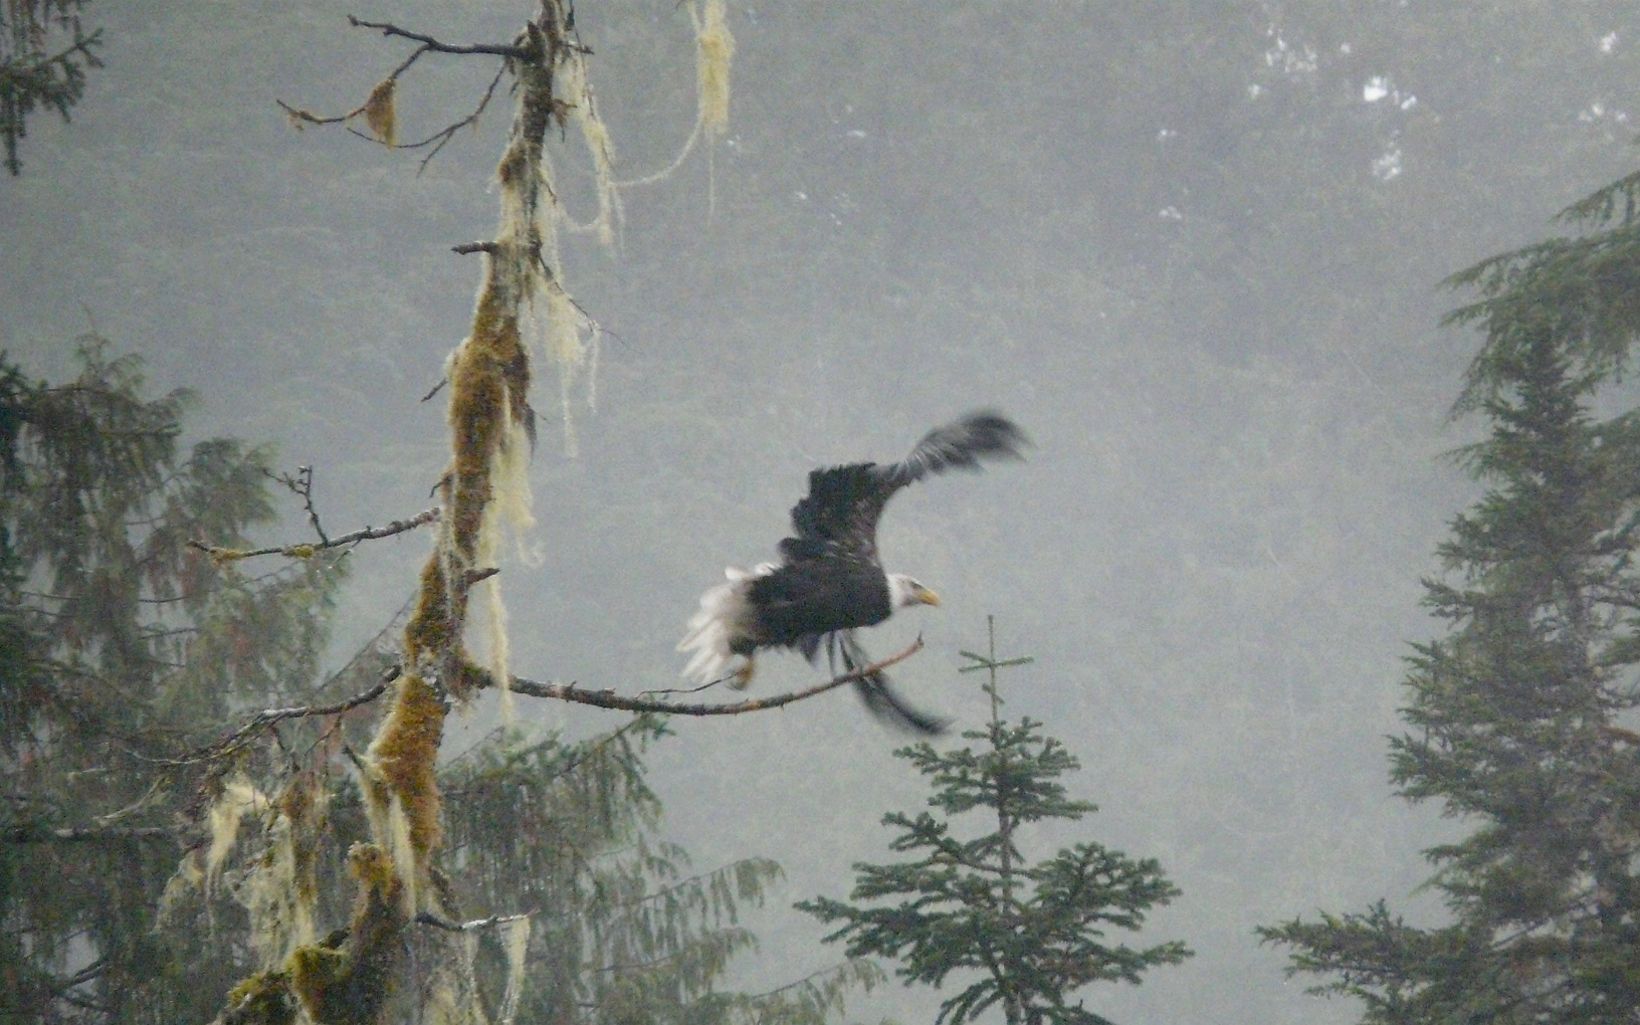 Bald Eagle An eagle takes flight along the fog shrouded Pacific coastline of the Great Bear Rainforest in Canada. © Sanjayan / TNC